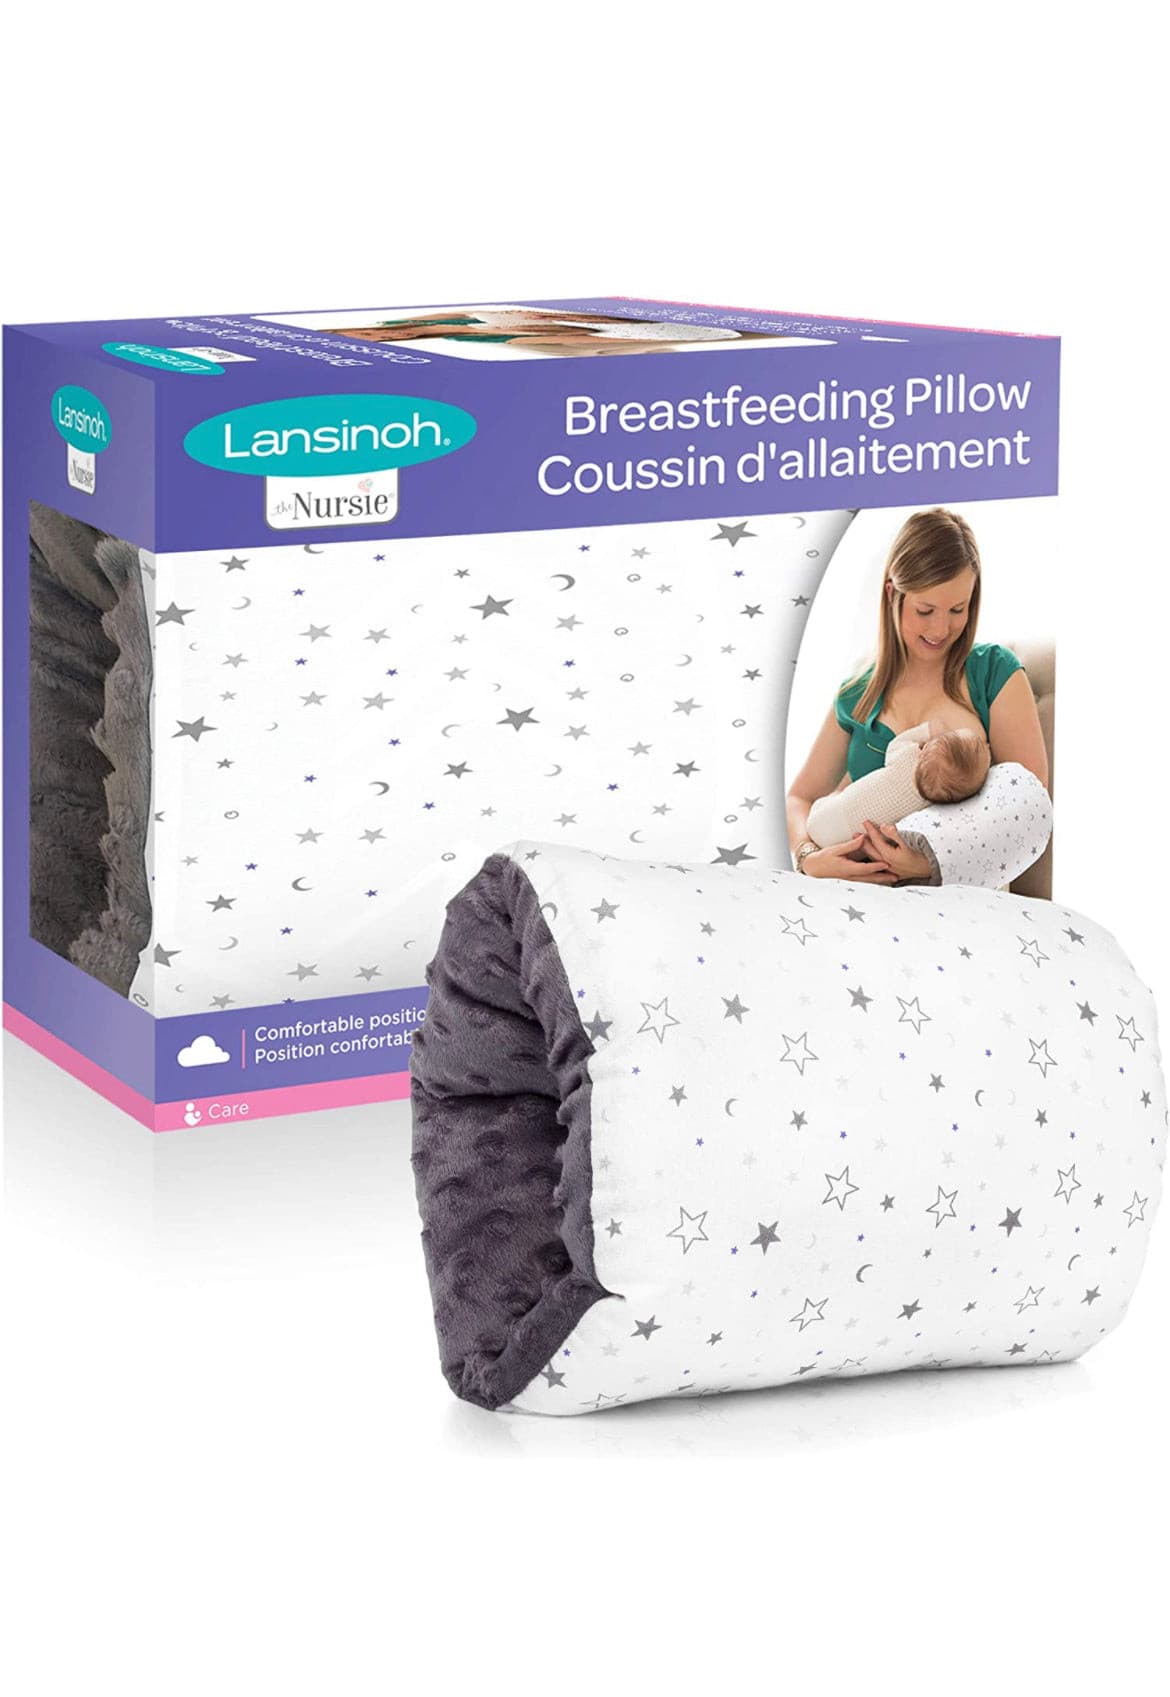 Lansinoh Nursing Pillow for Breastfeeding.